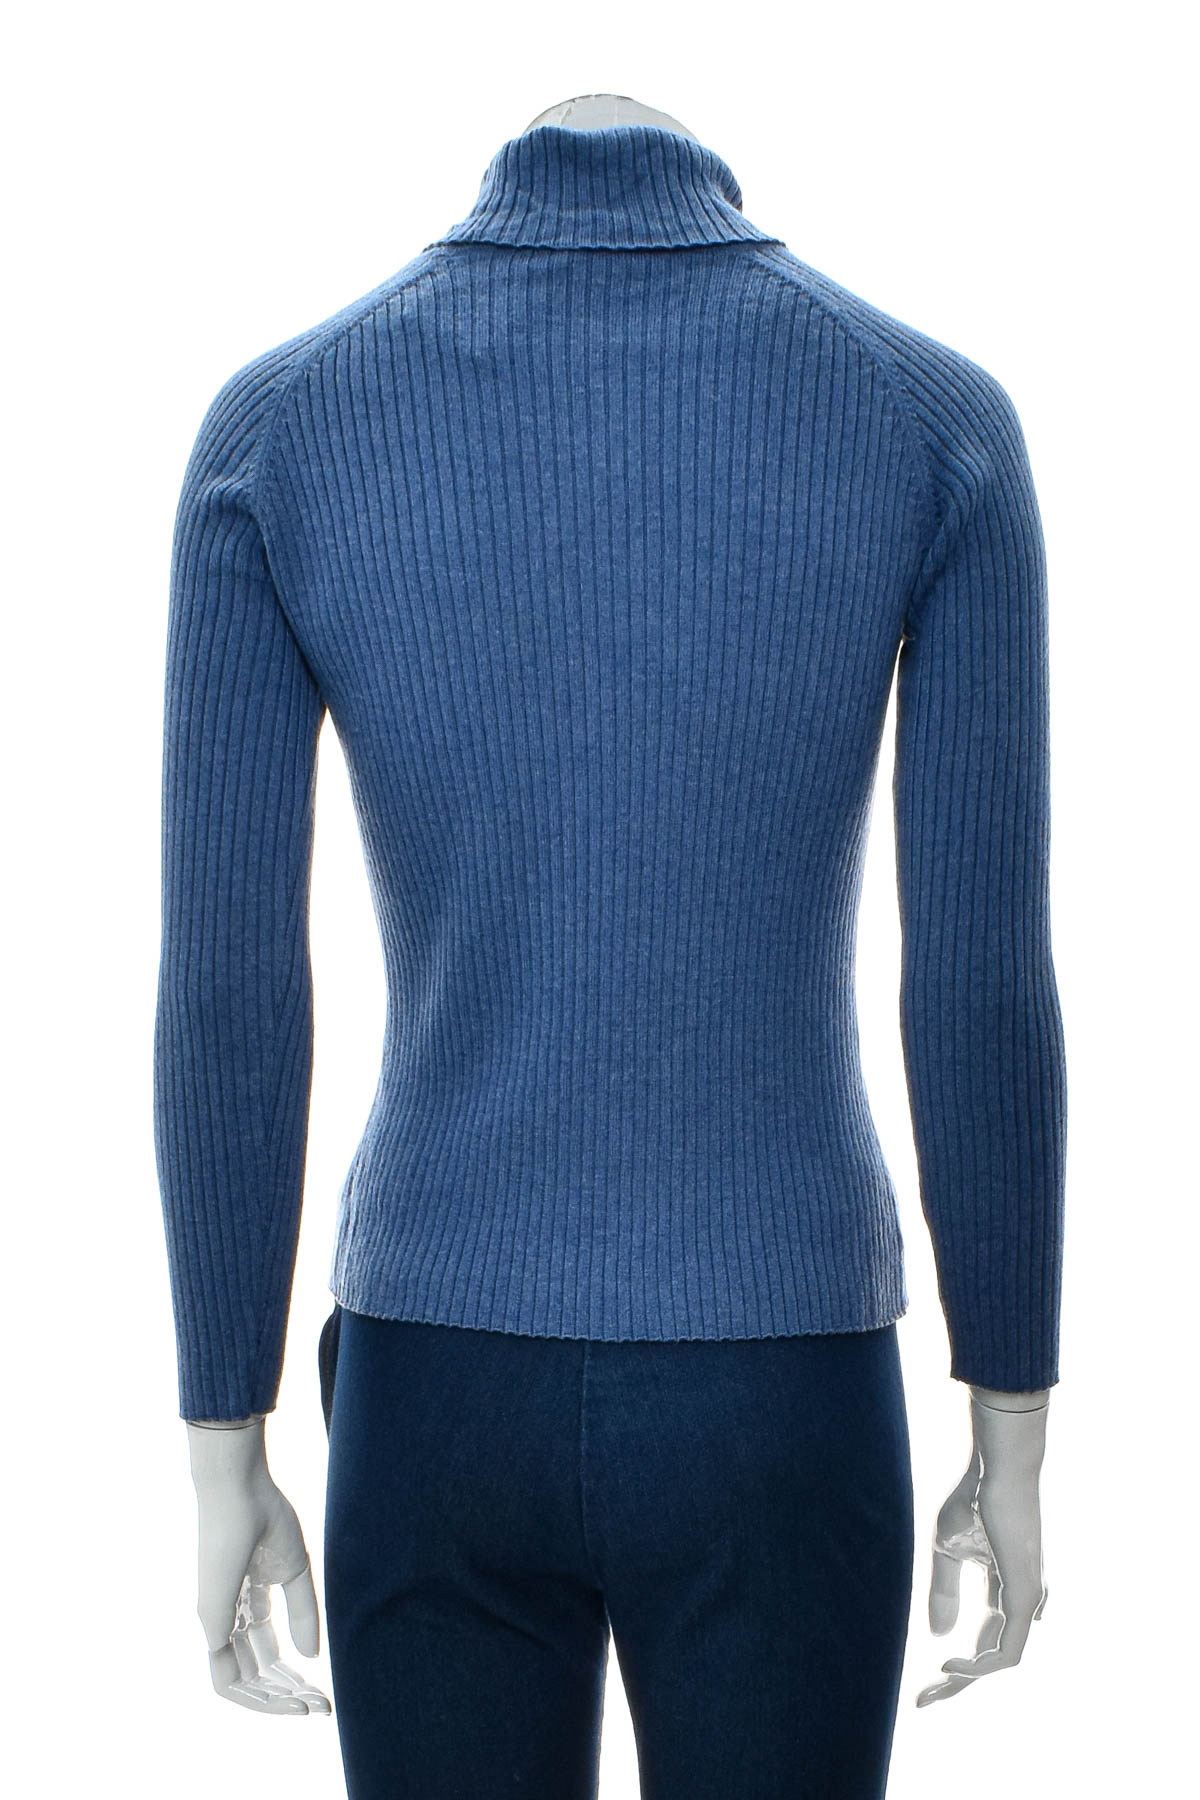 Women's sweater - Peter Hahn - 1